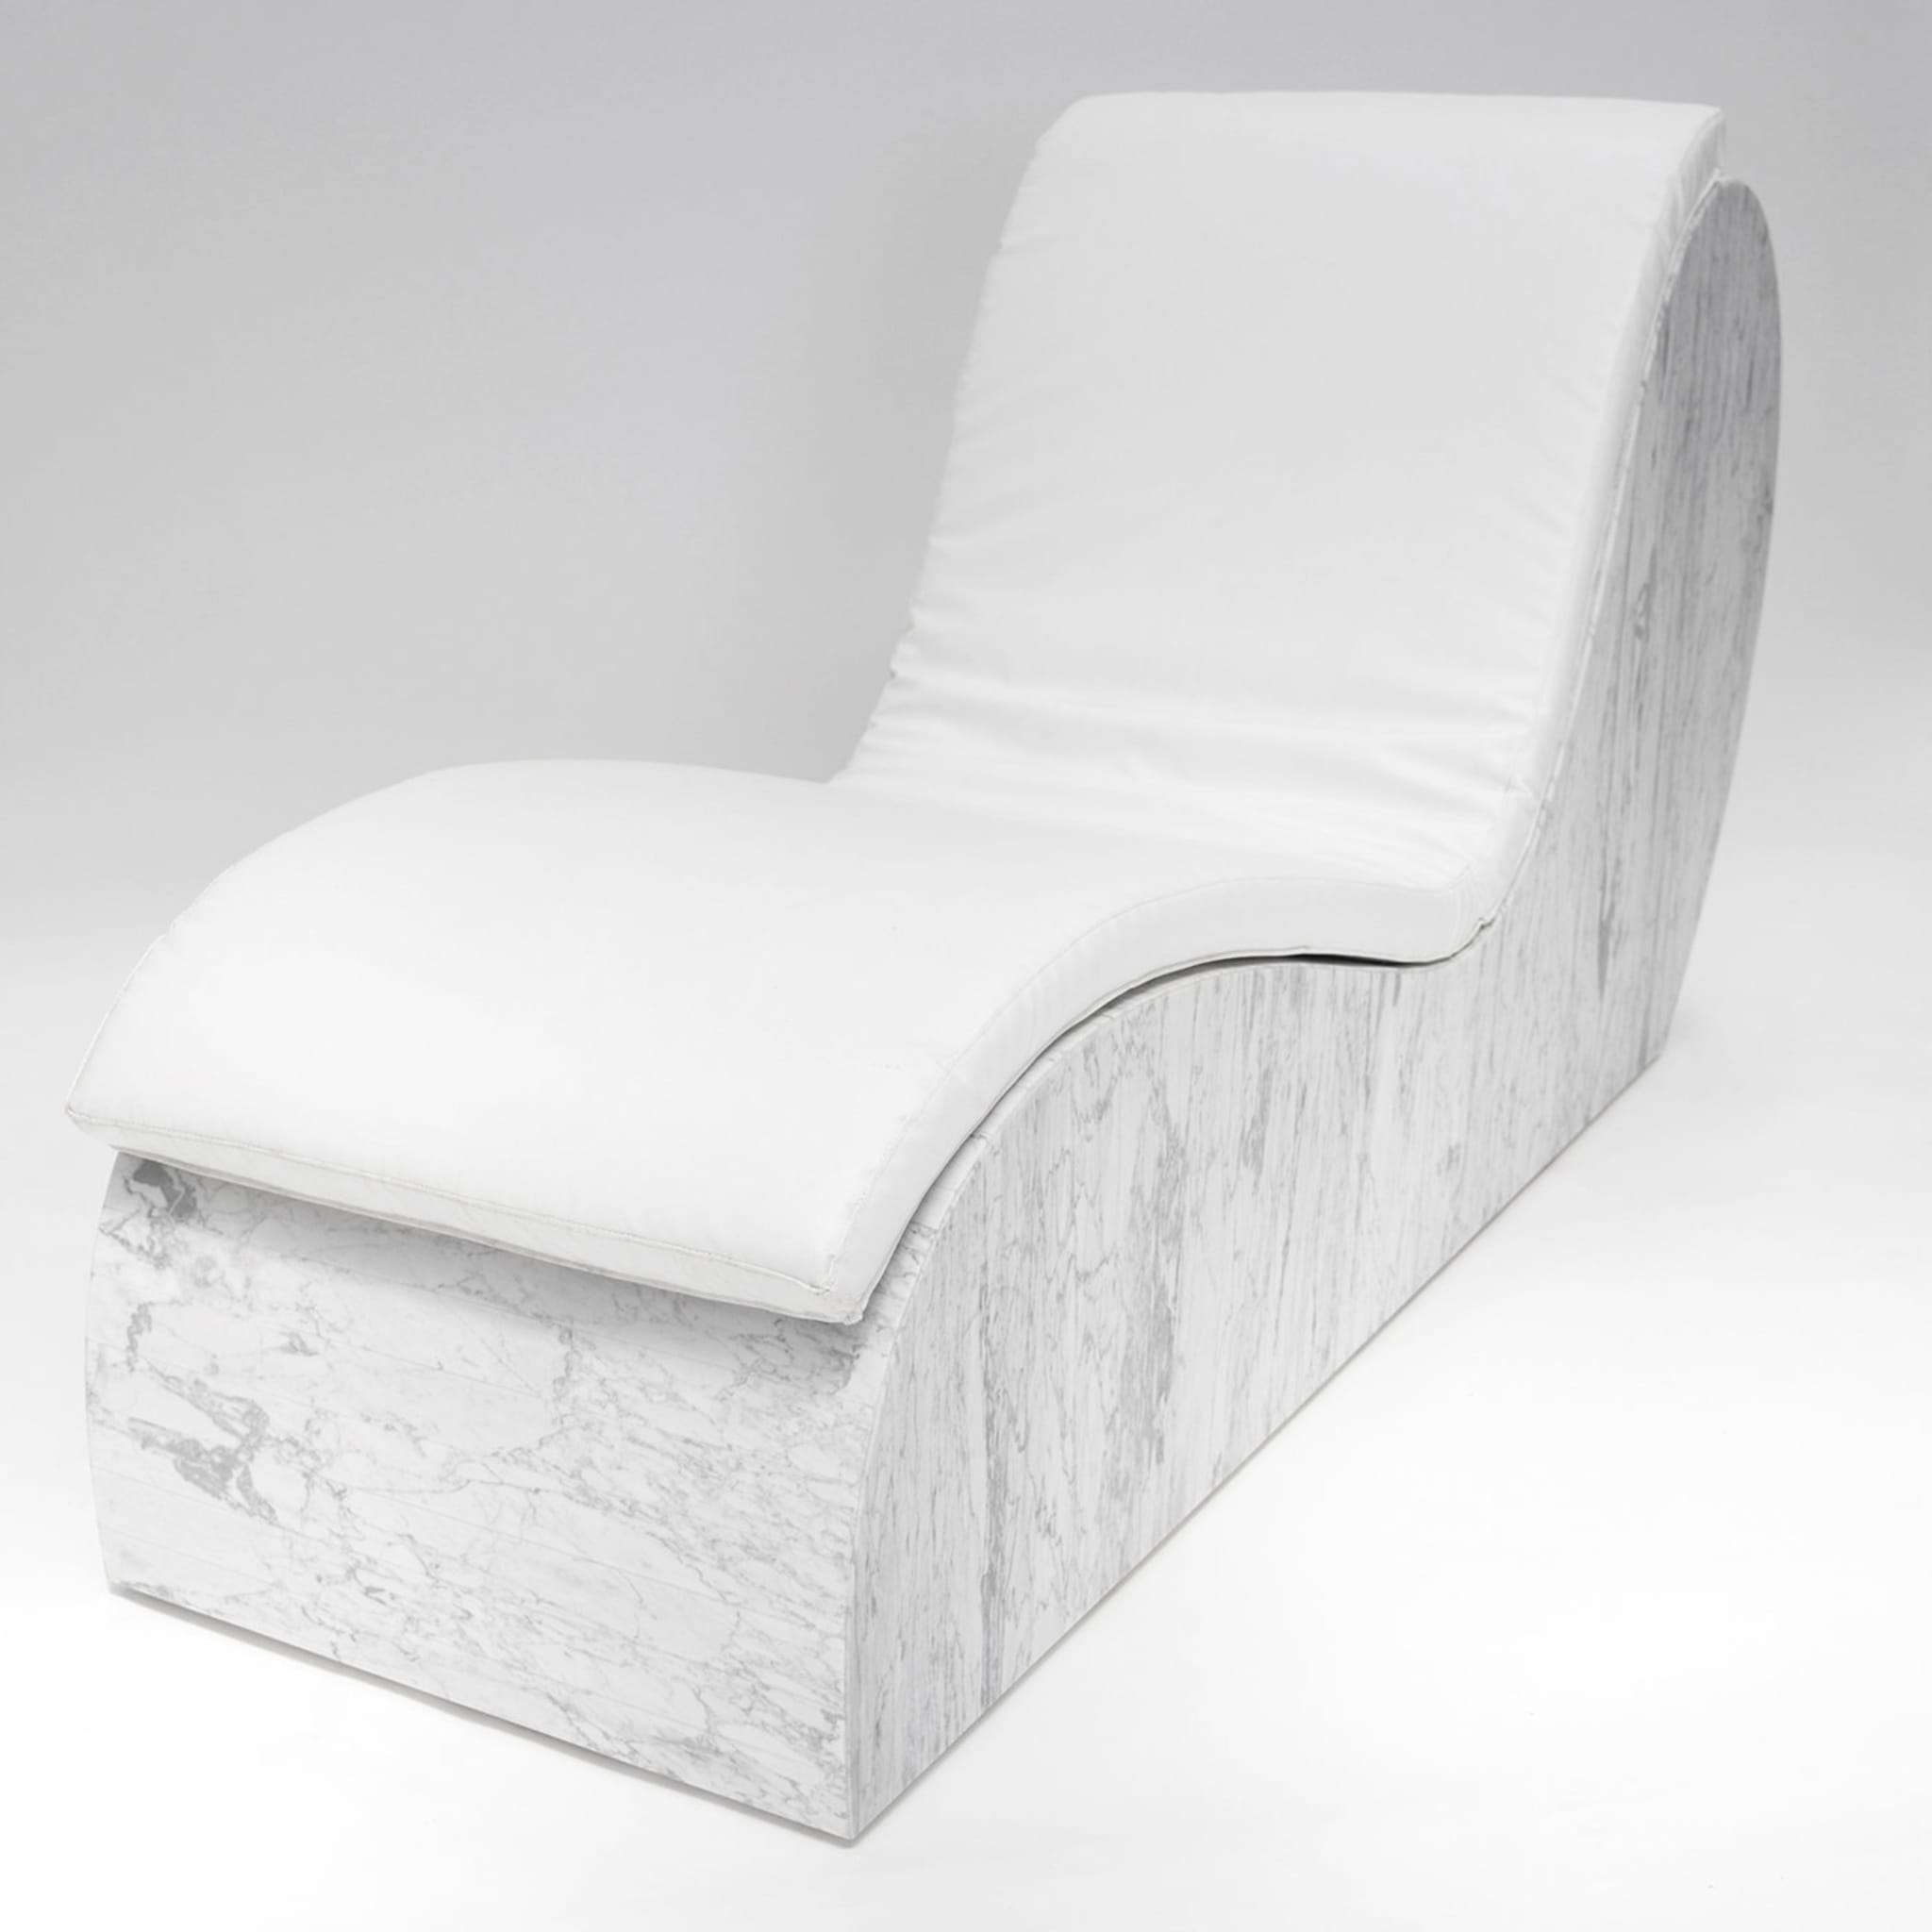 Ondalta Chaise Longue with Cushion - Alternative view 1